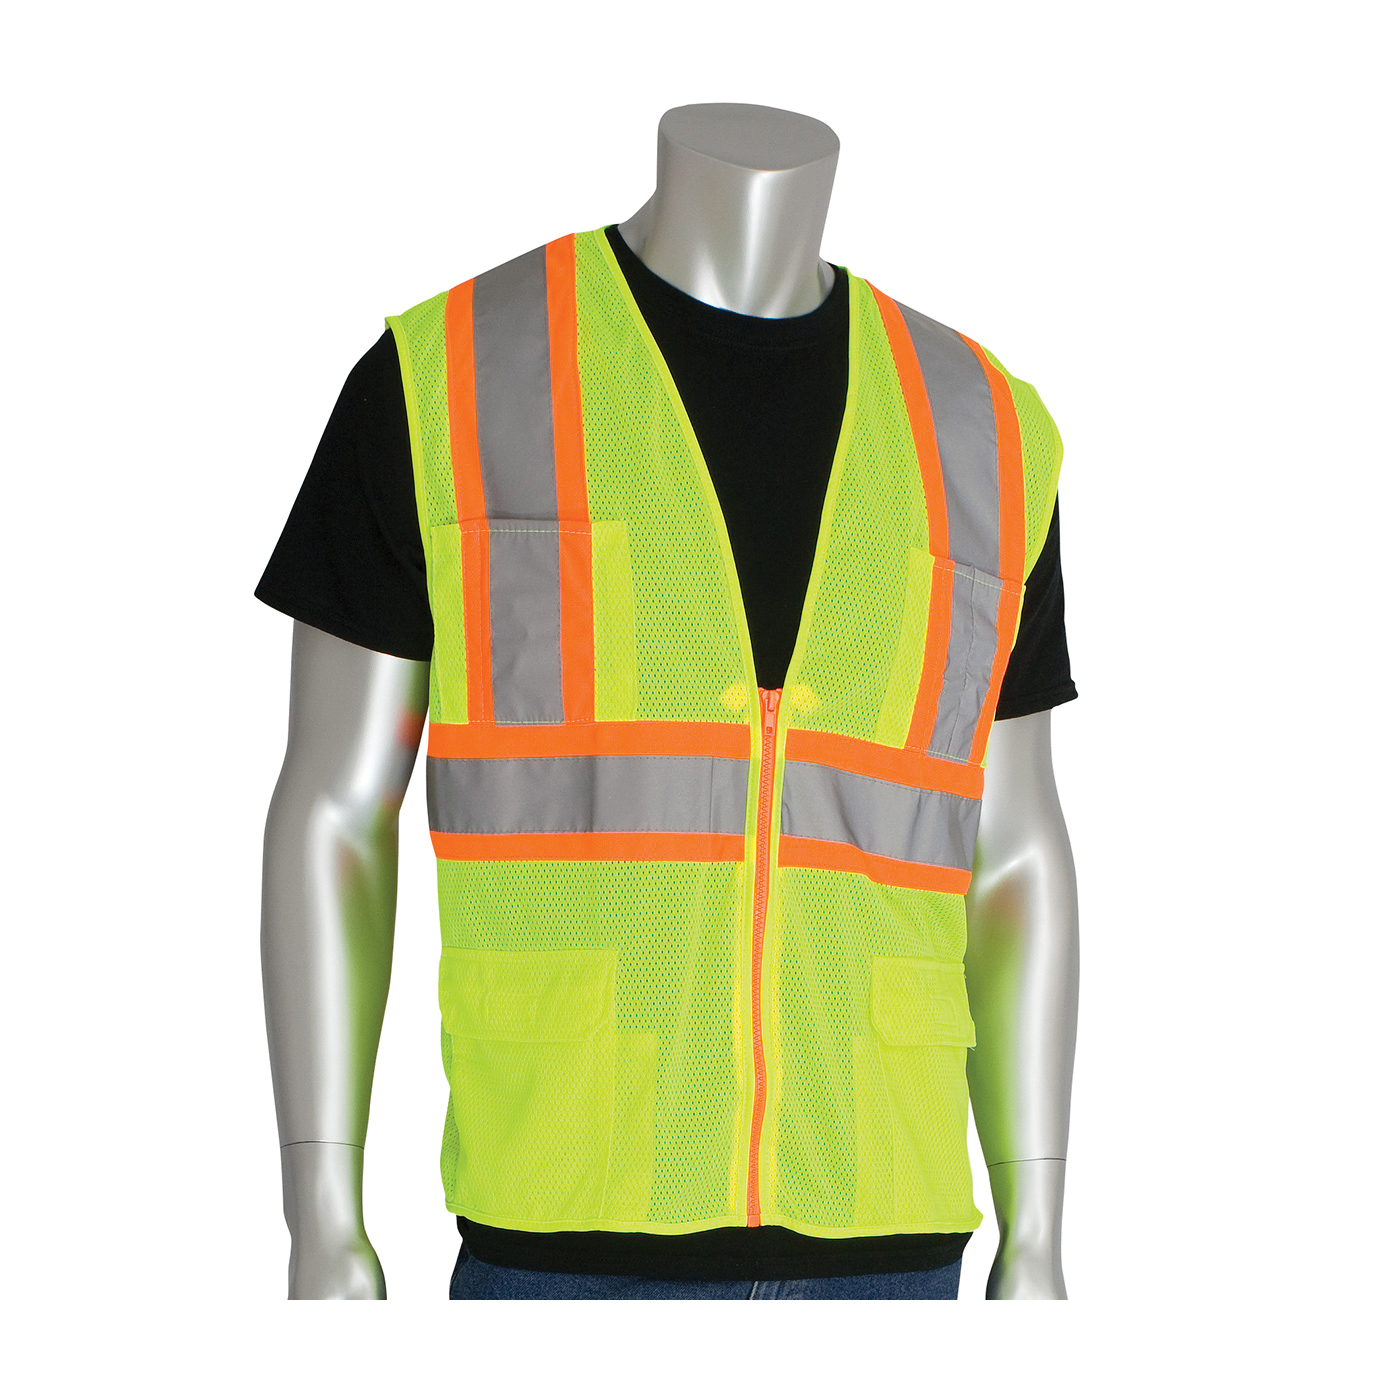 PIP® 302-MAPMLY-2X 2-Tone Premium Surveyor Safety Vest, 2XL, Hi-Viz Lime Yellow, Polyester, Zipper Closure, 11 Pockets, ANSI Class: Class 2, Specifications Met: ANSI 107 Type R